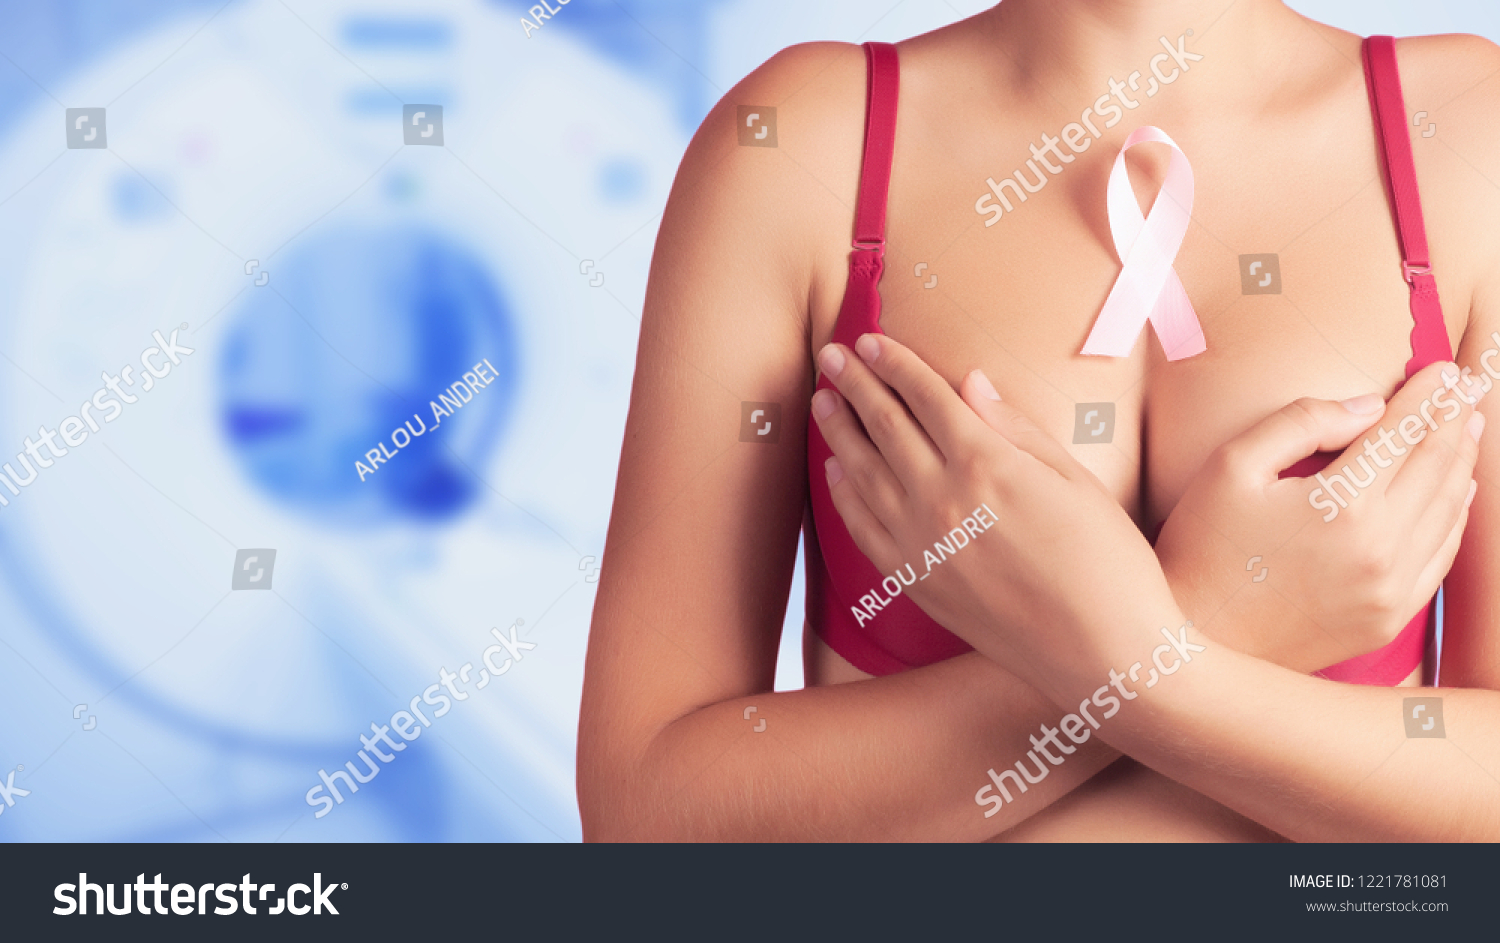 норма груди у женщин фото 82